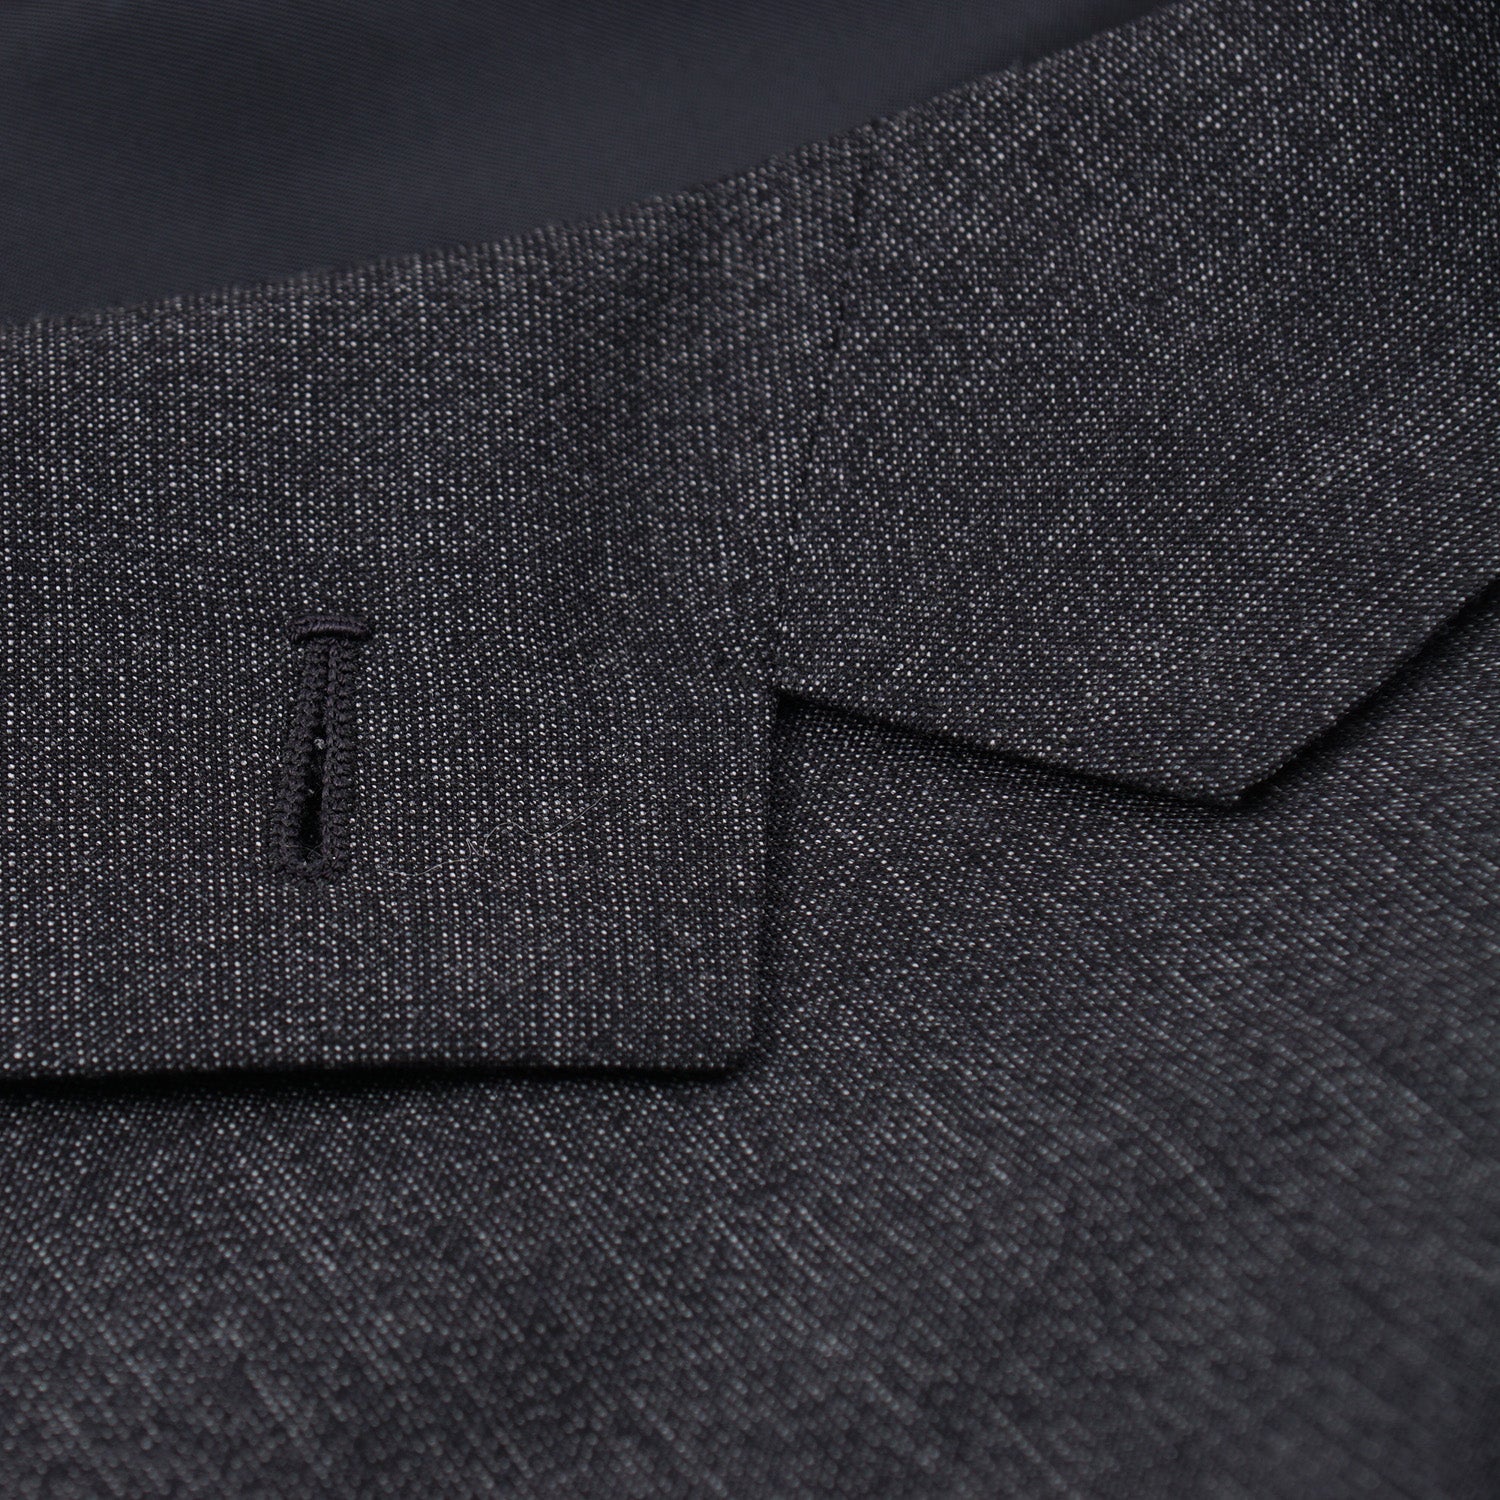 Ermenegildo Zegna 'Trecapi' Wool Suit - Top Shelf Apparel